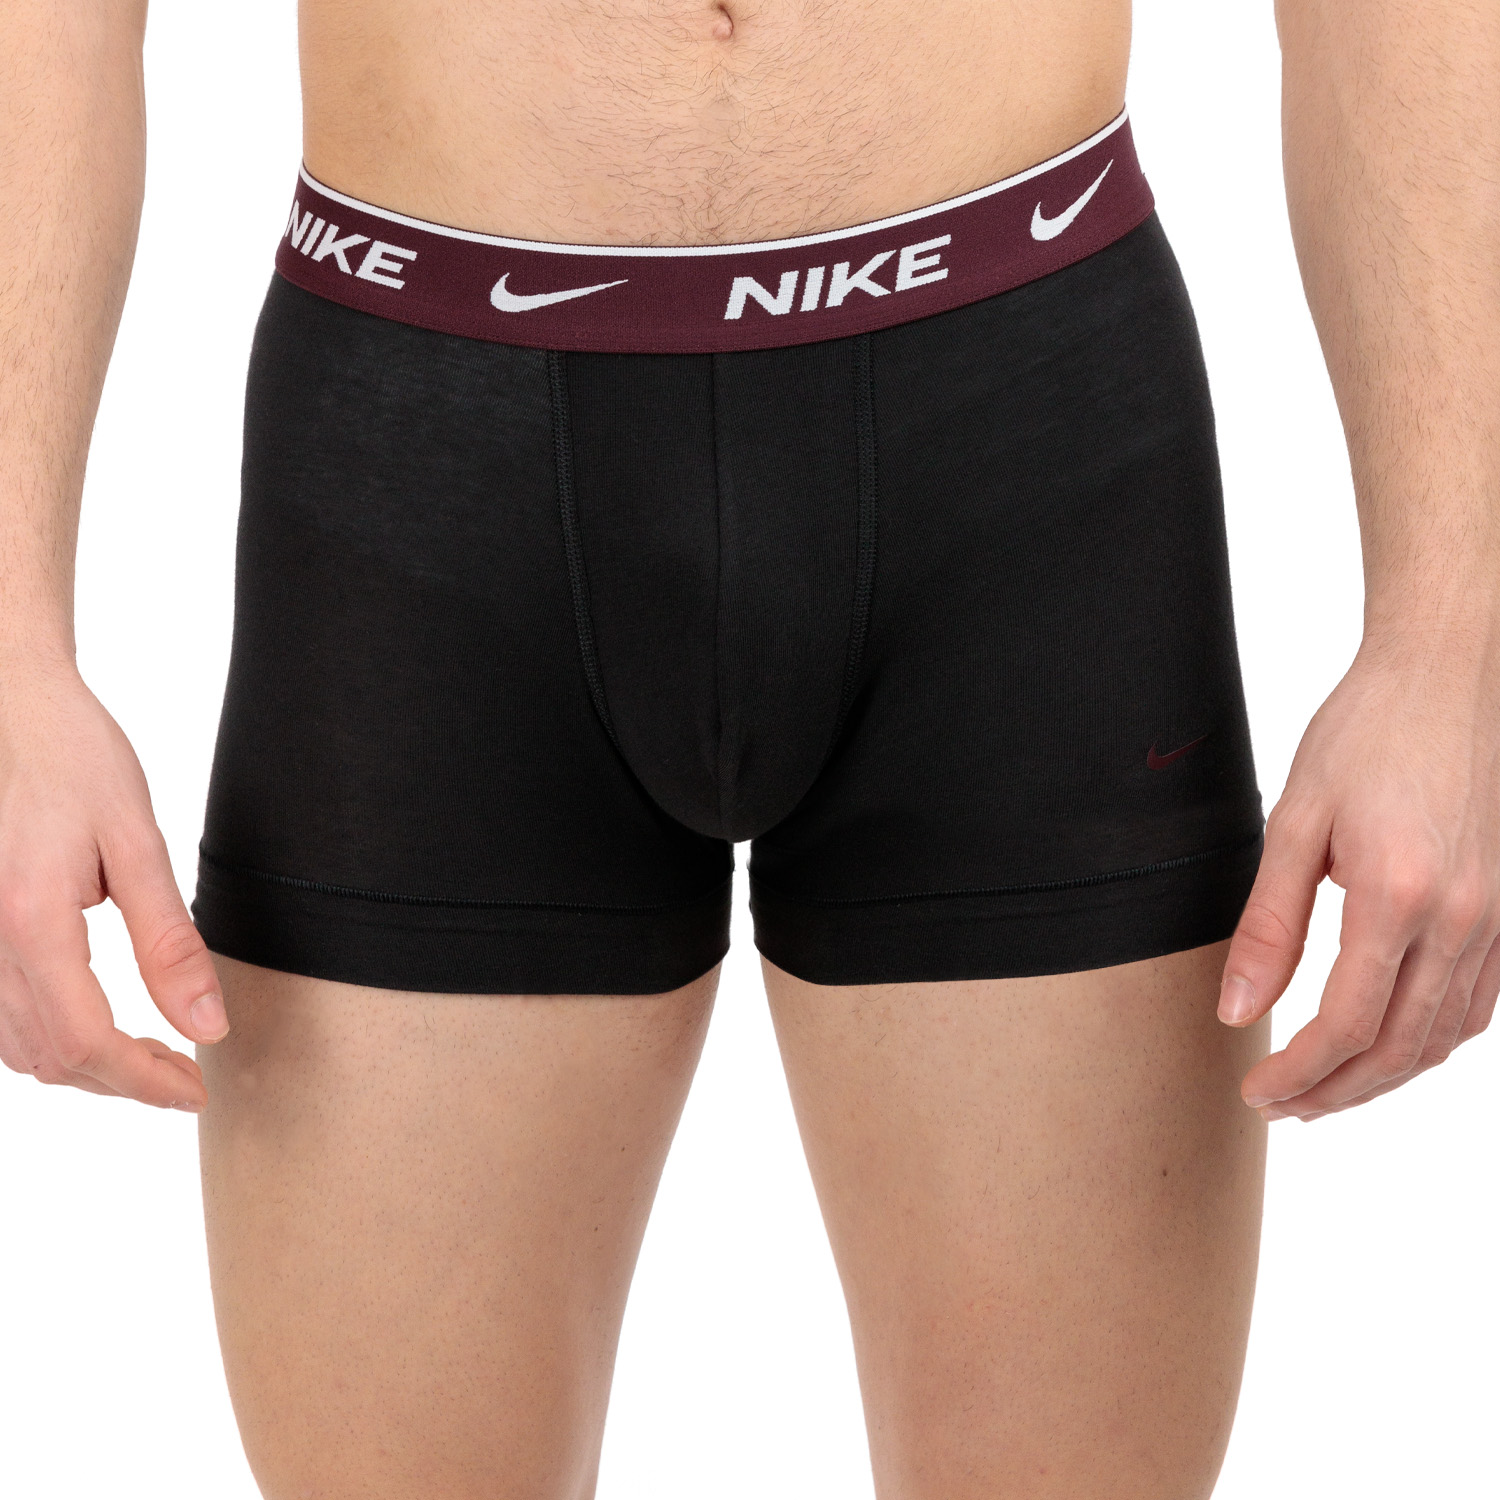 Nike Everyday Stretch x 3 Men's Underwear Boxers - Black/Rus